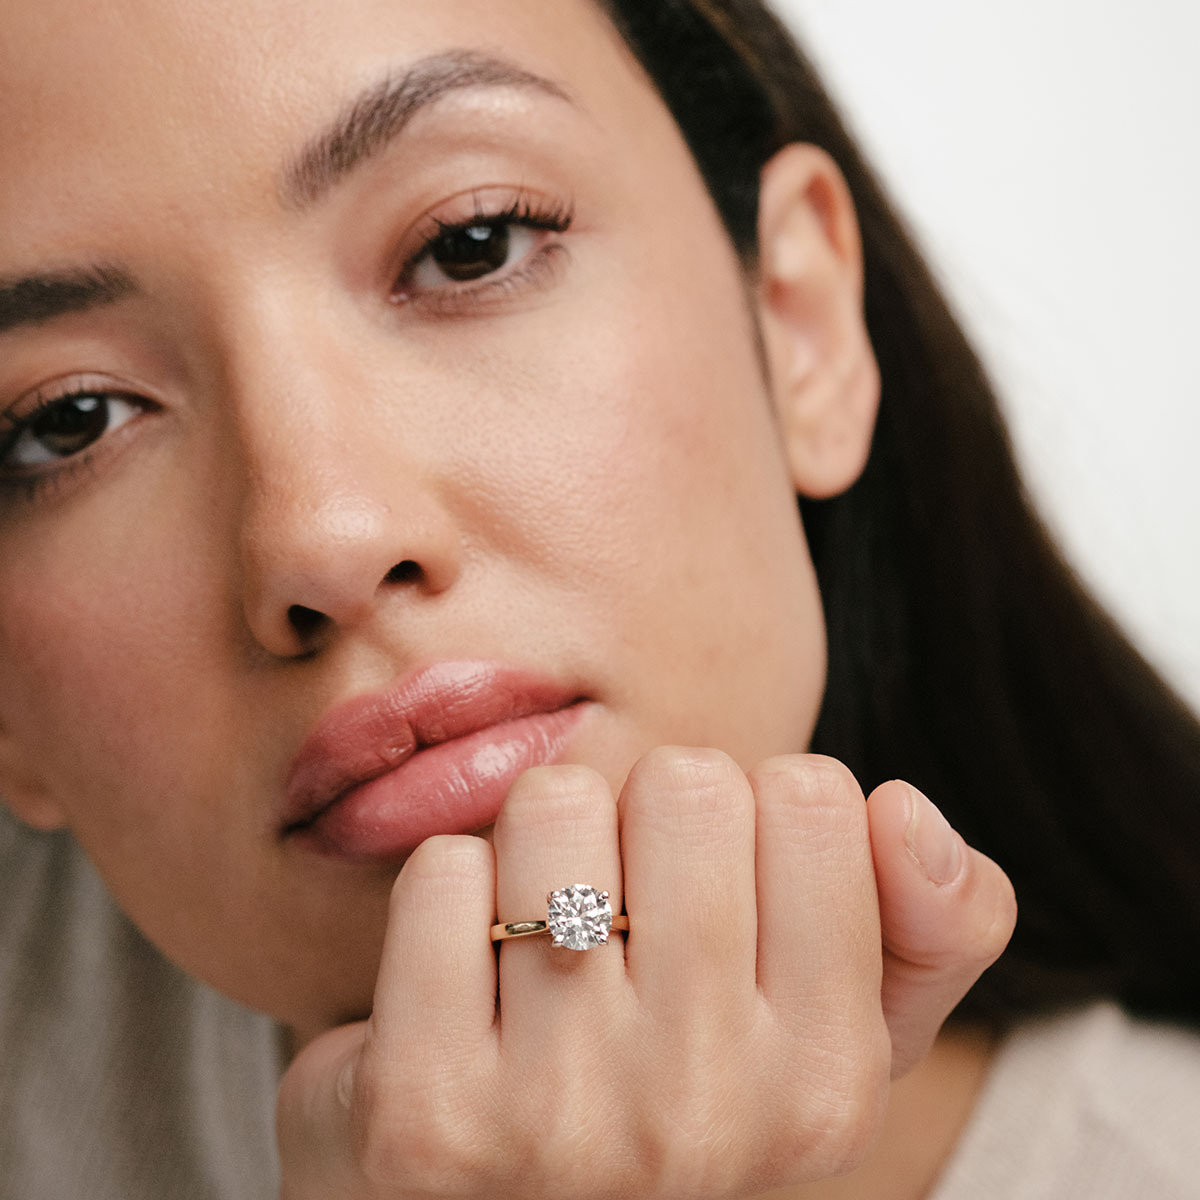 model wearing engagement ring